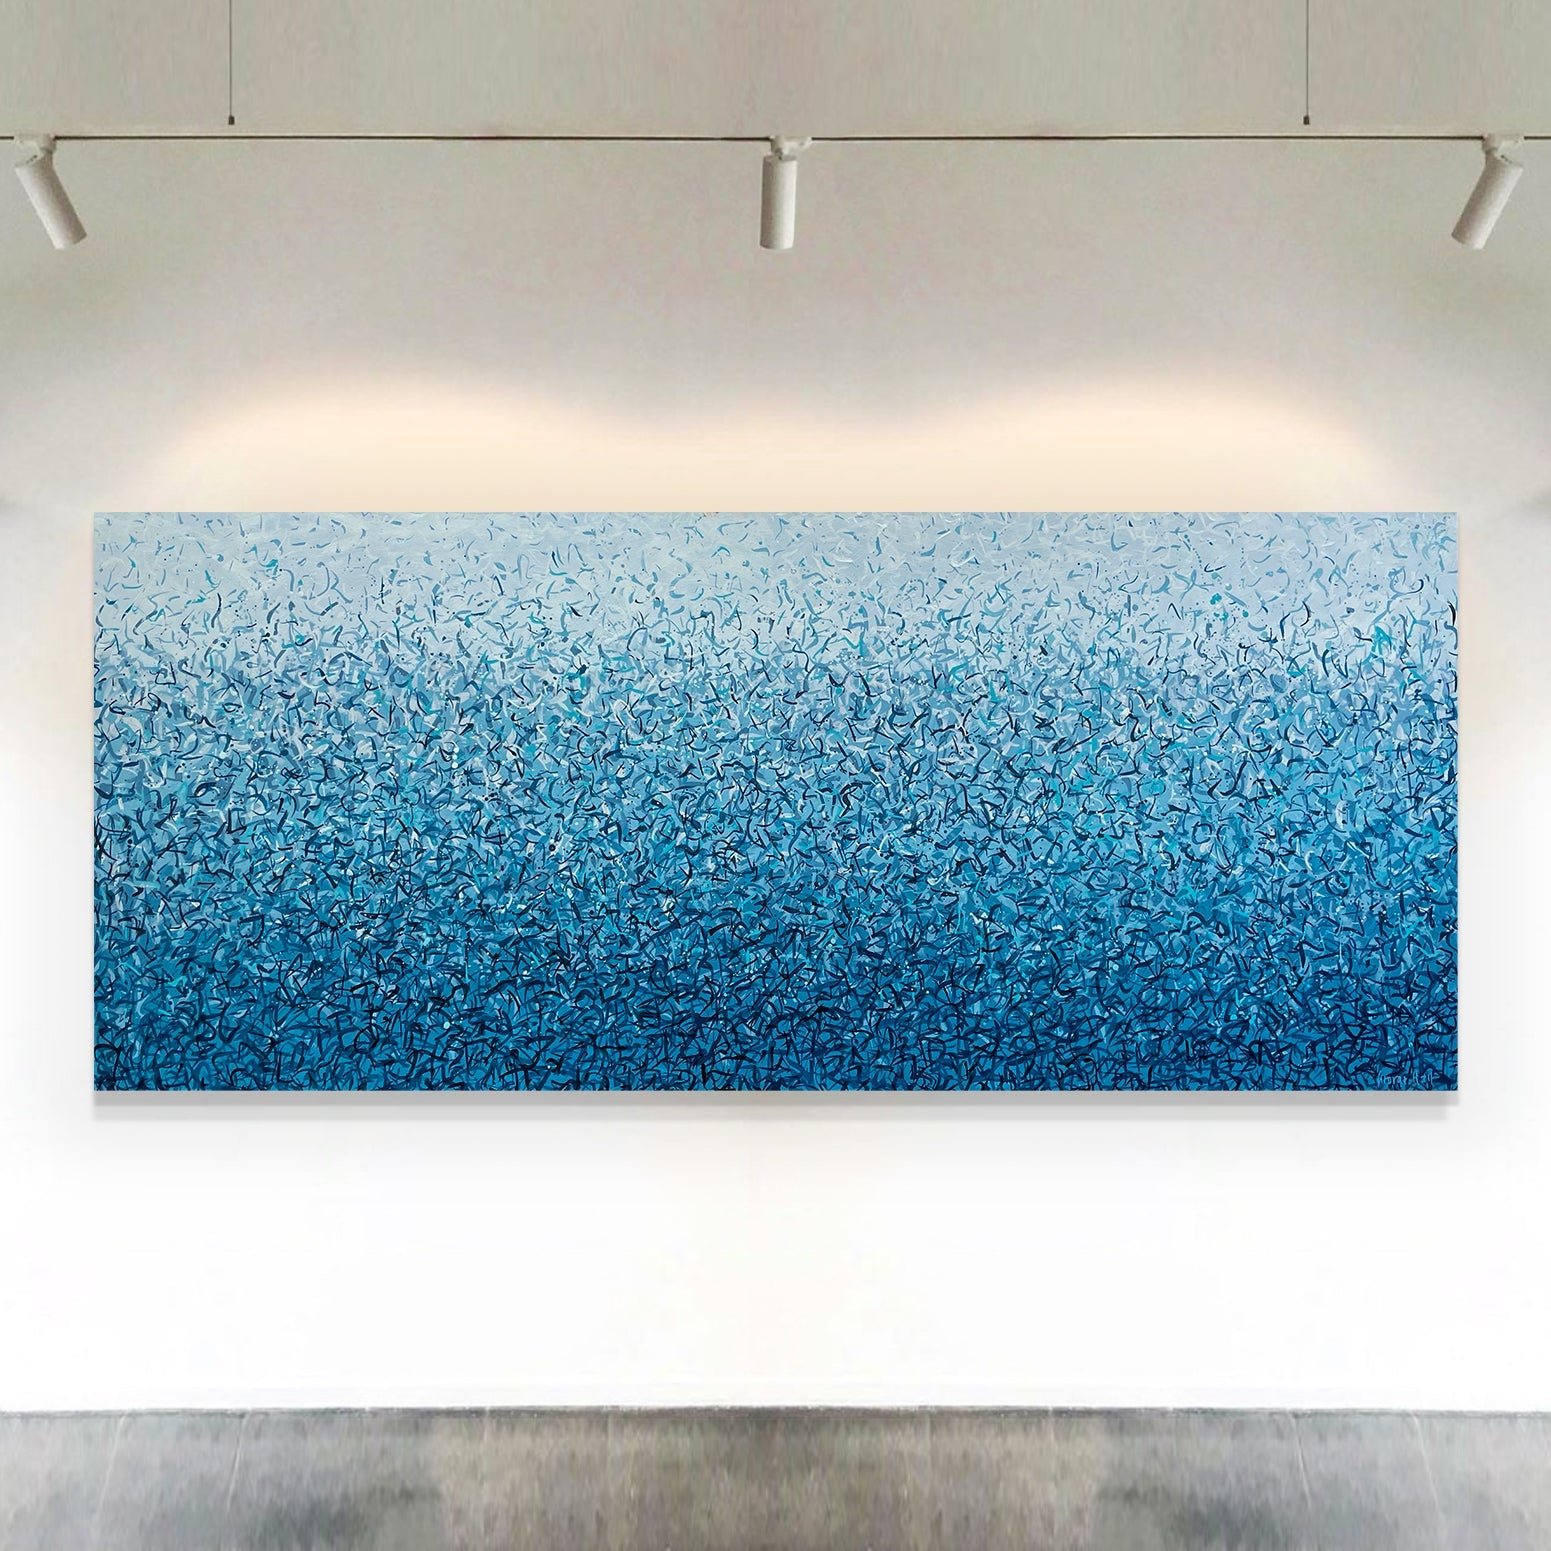 Werrong Water Dance- 200 x 85cm acrylic on canvas